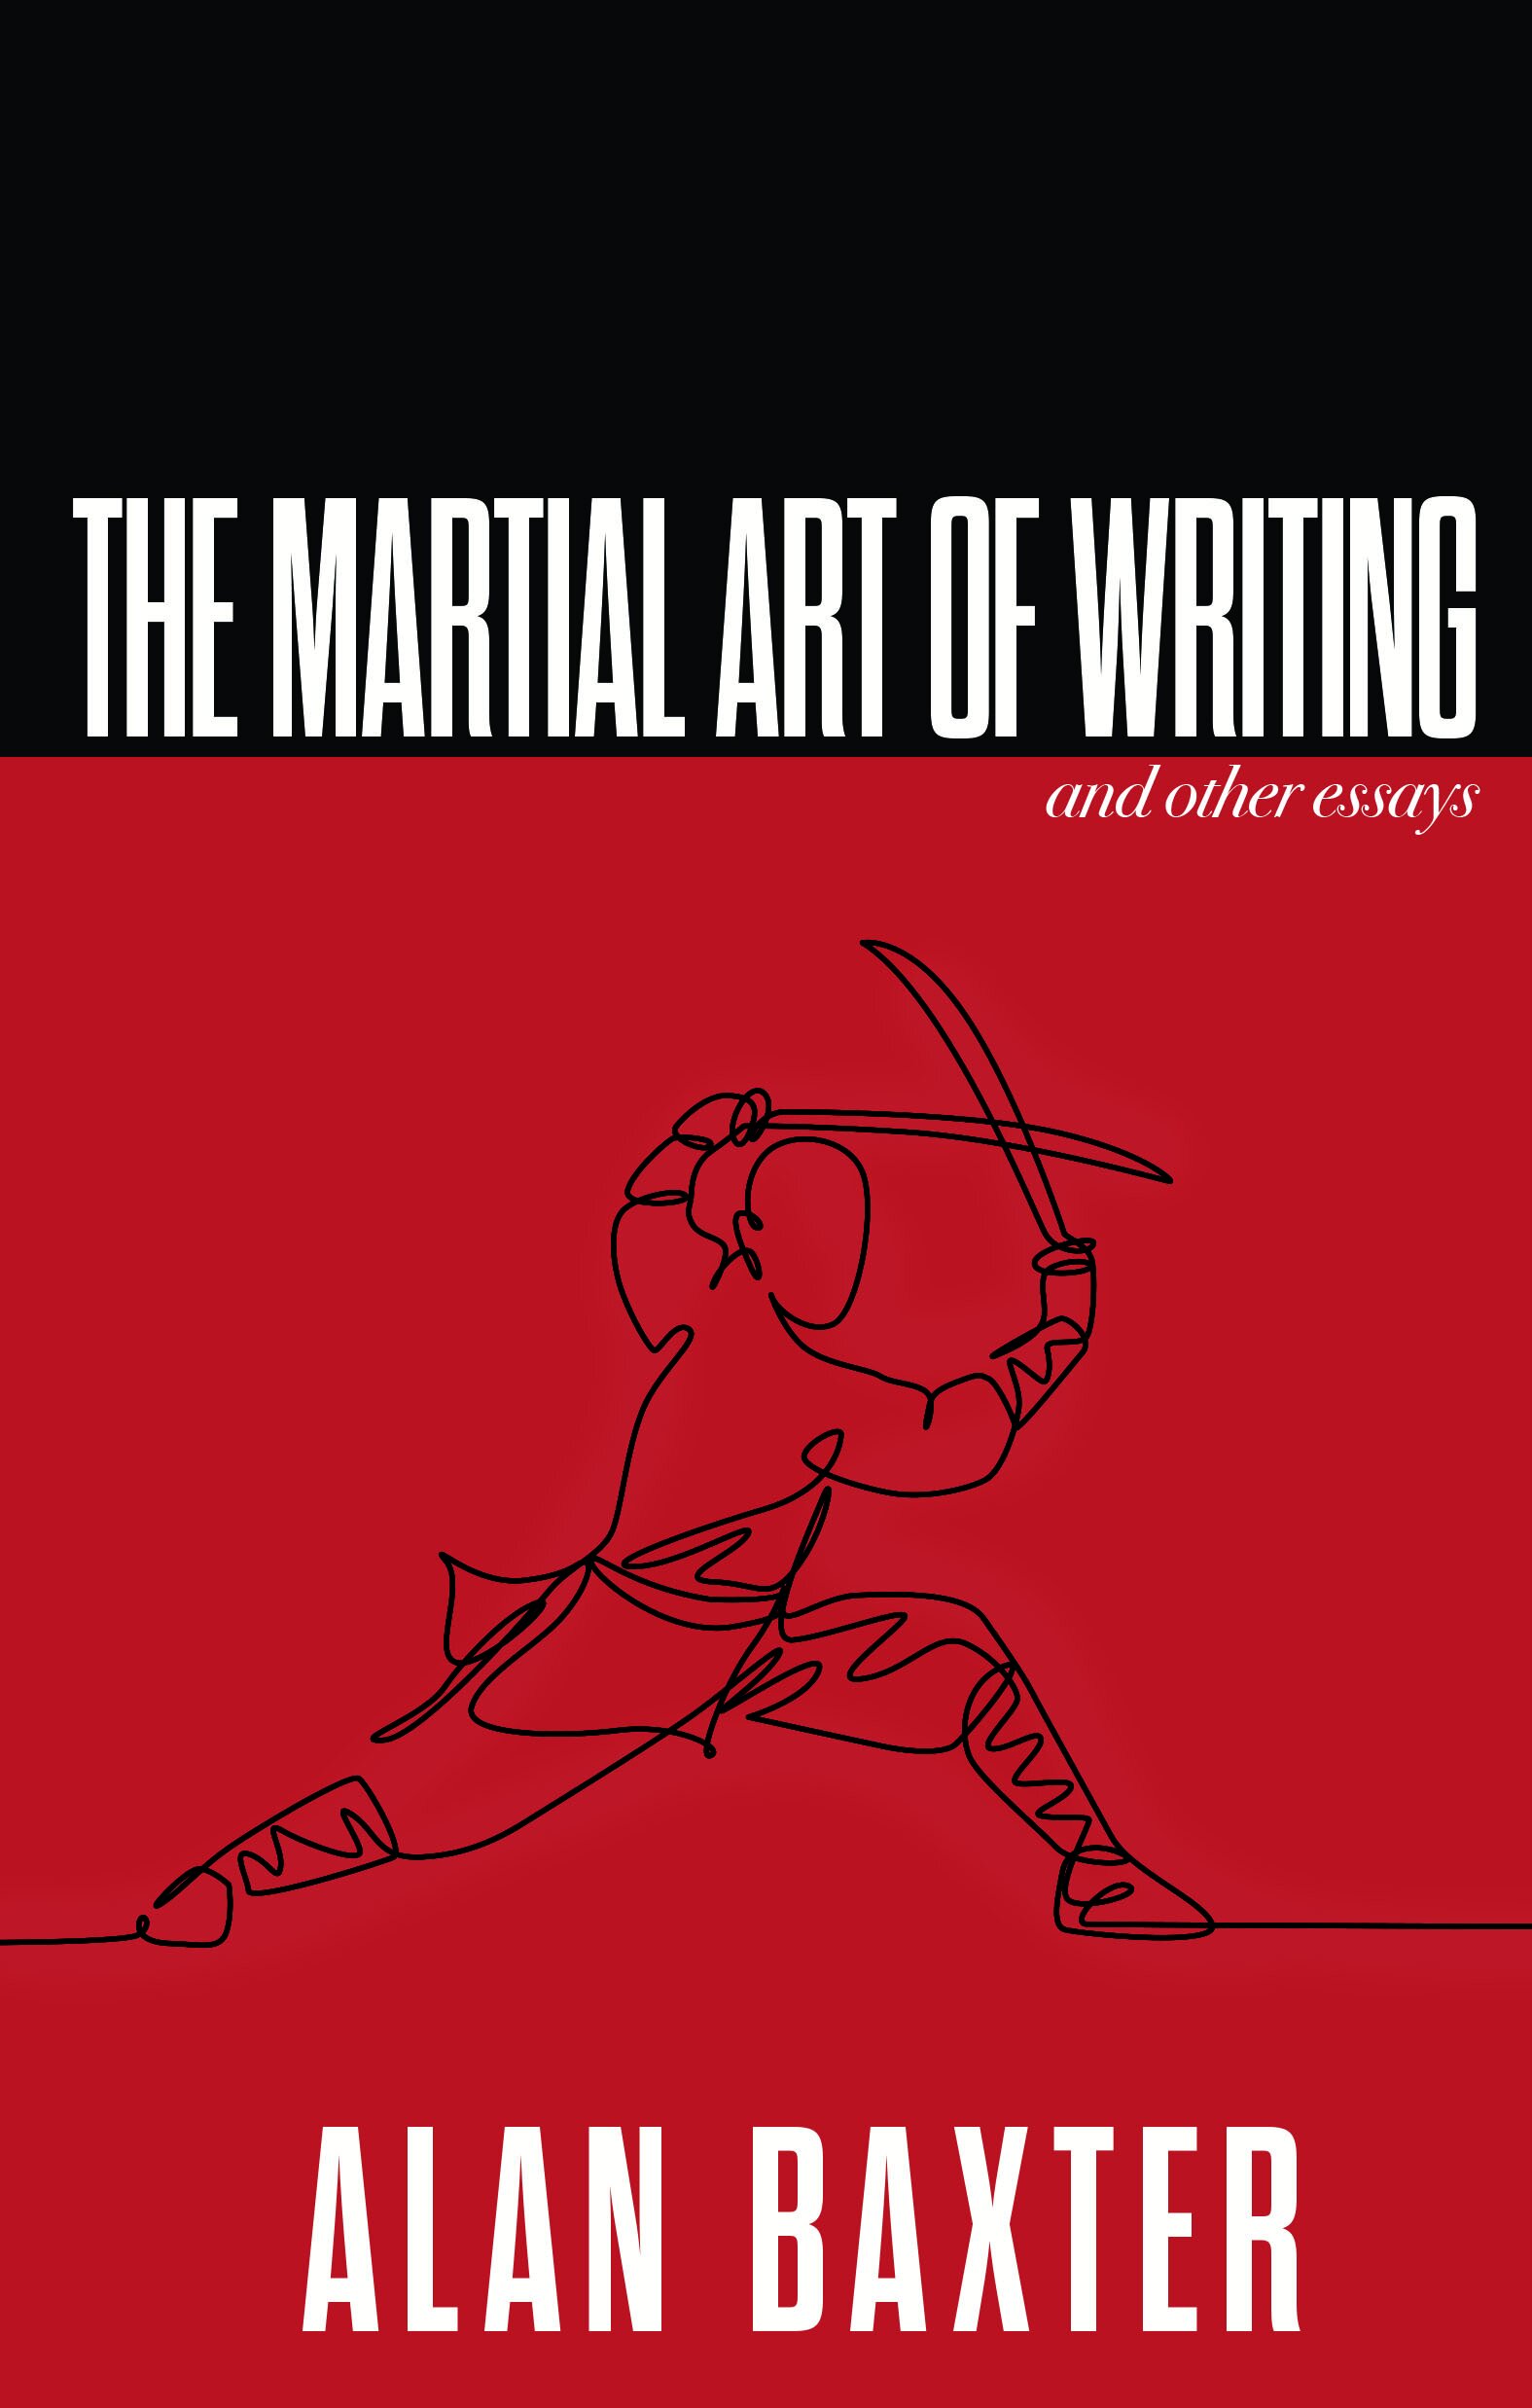 The-Martial-Art-of-Writing-300-DPI.jpg